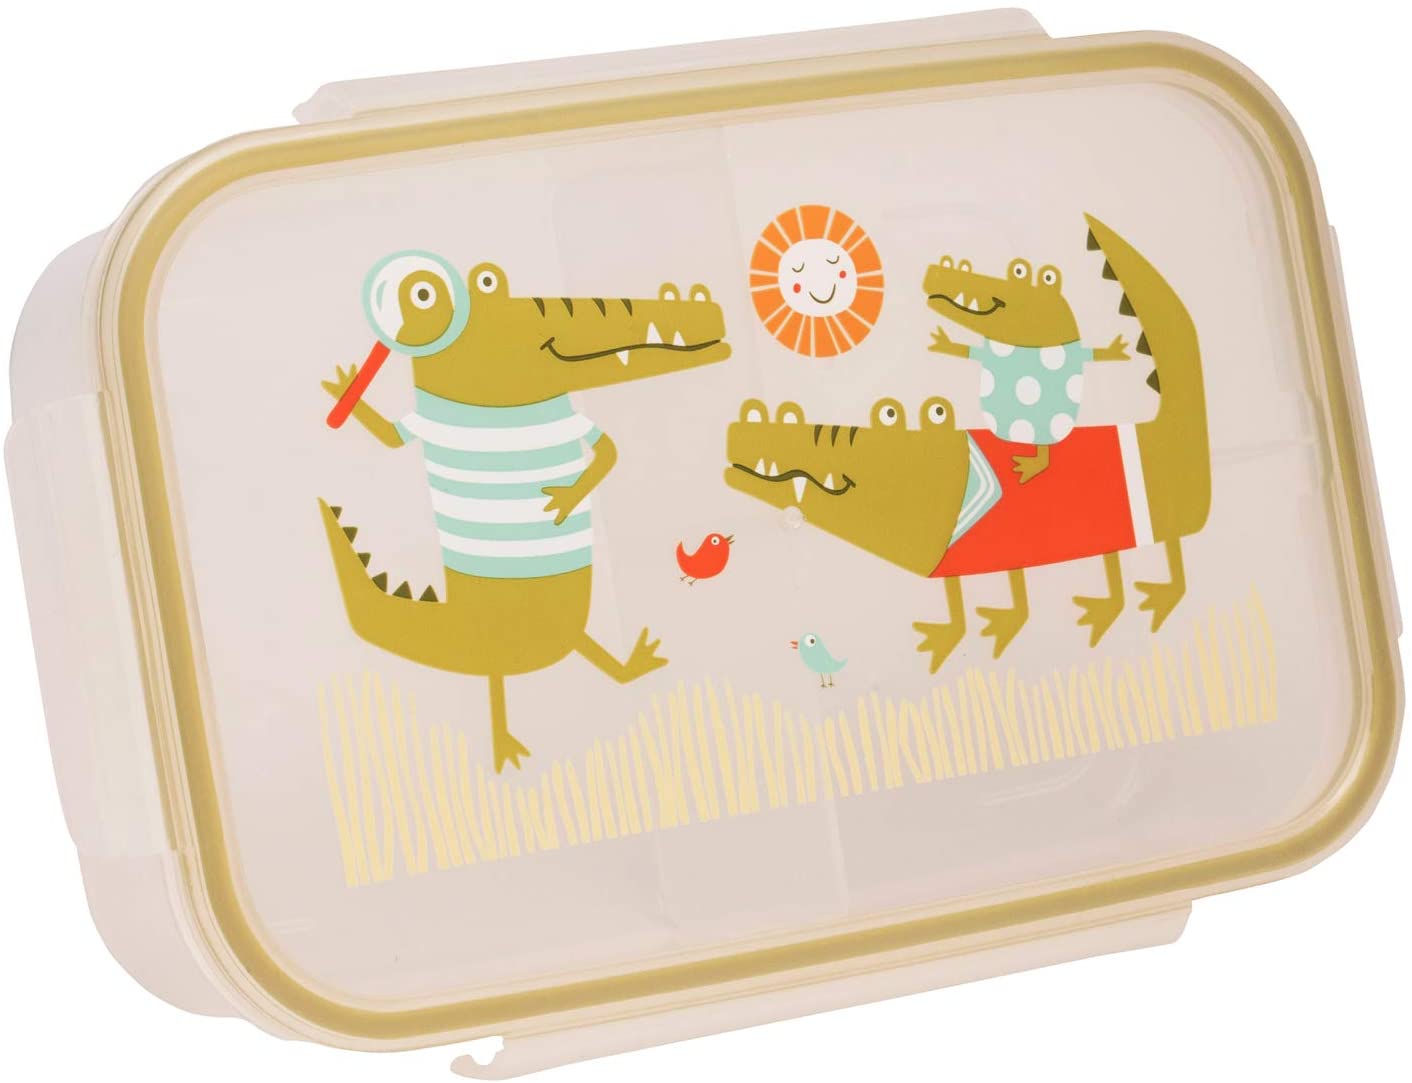 Sugarbooger Good Lunch Bento Box - Ollie Gator